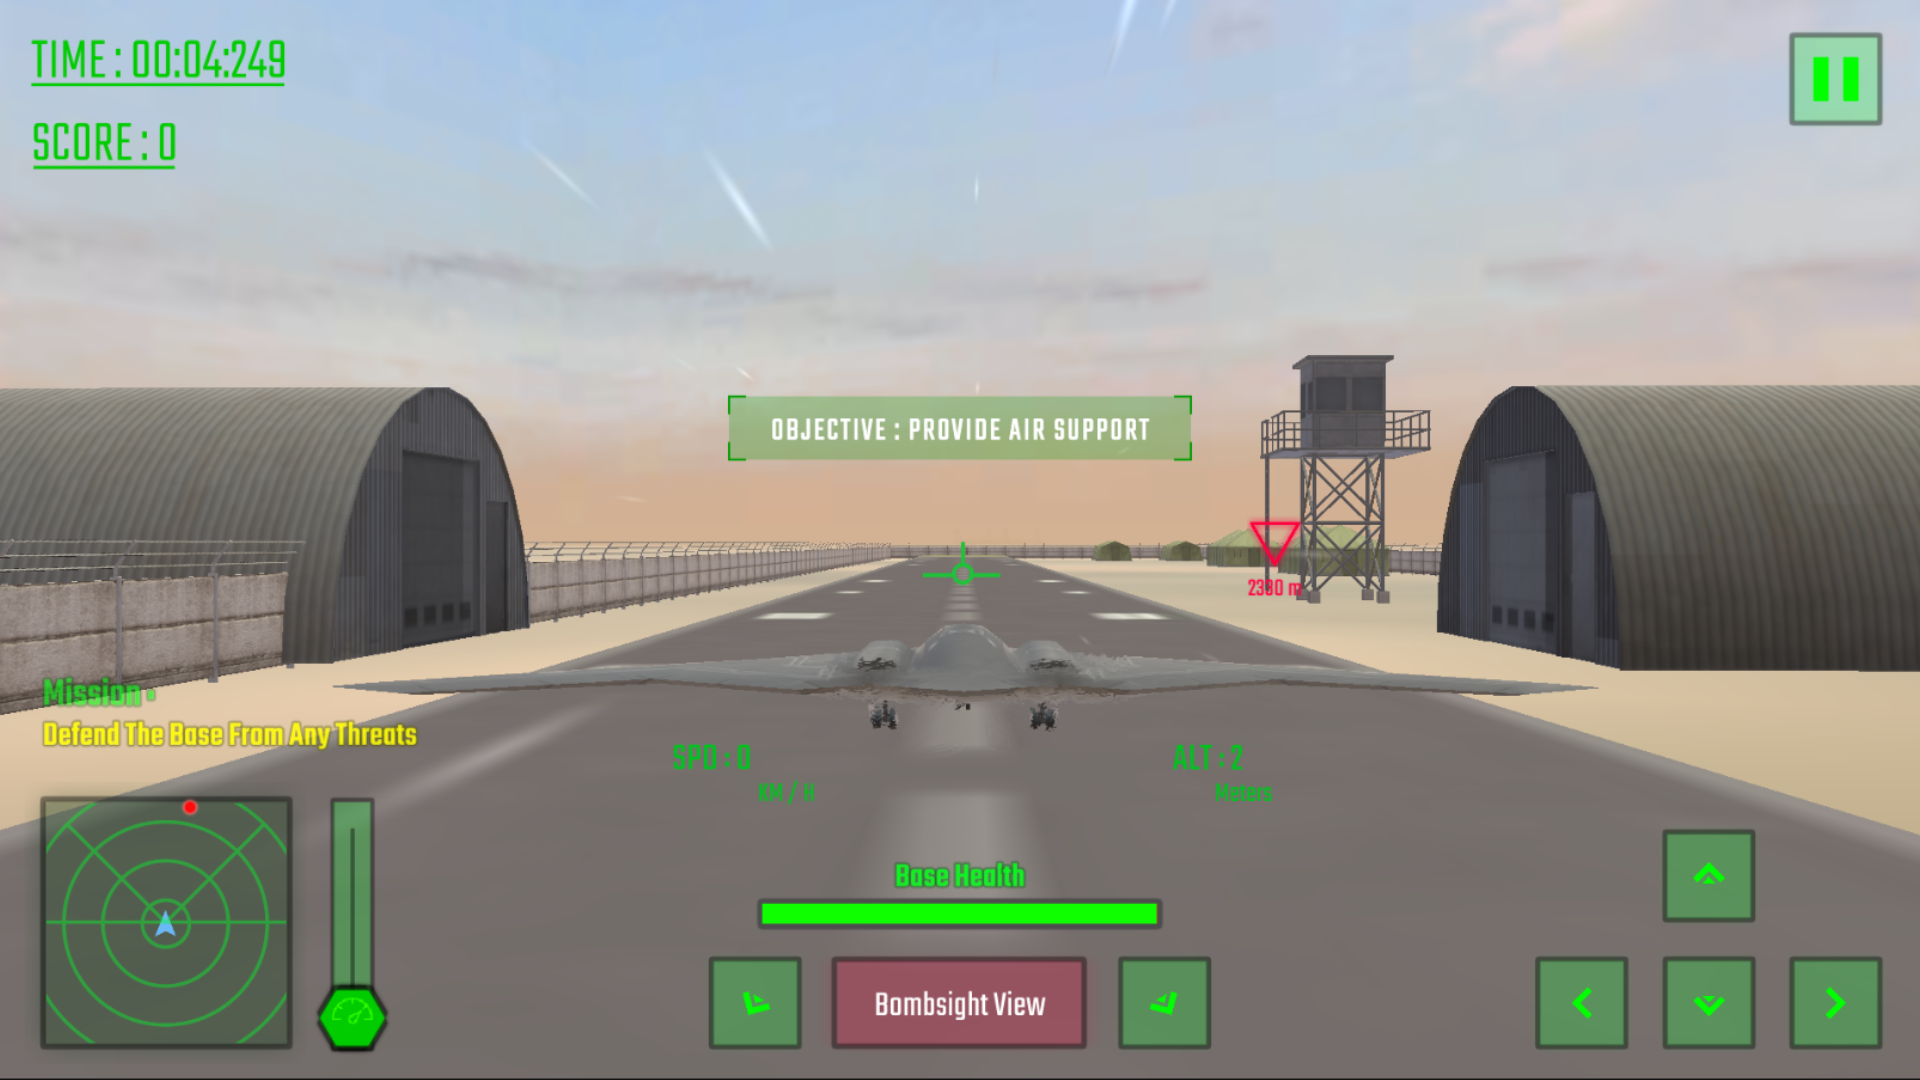 Screenshot of Modern Bomber Mission